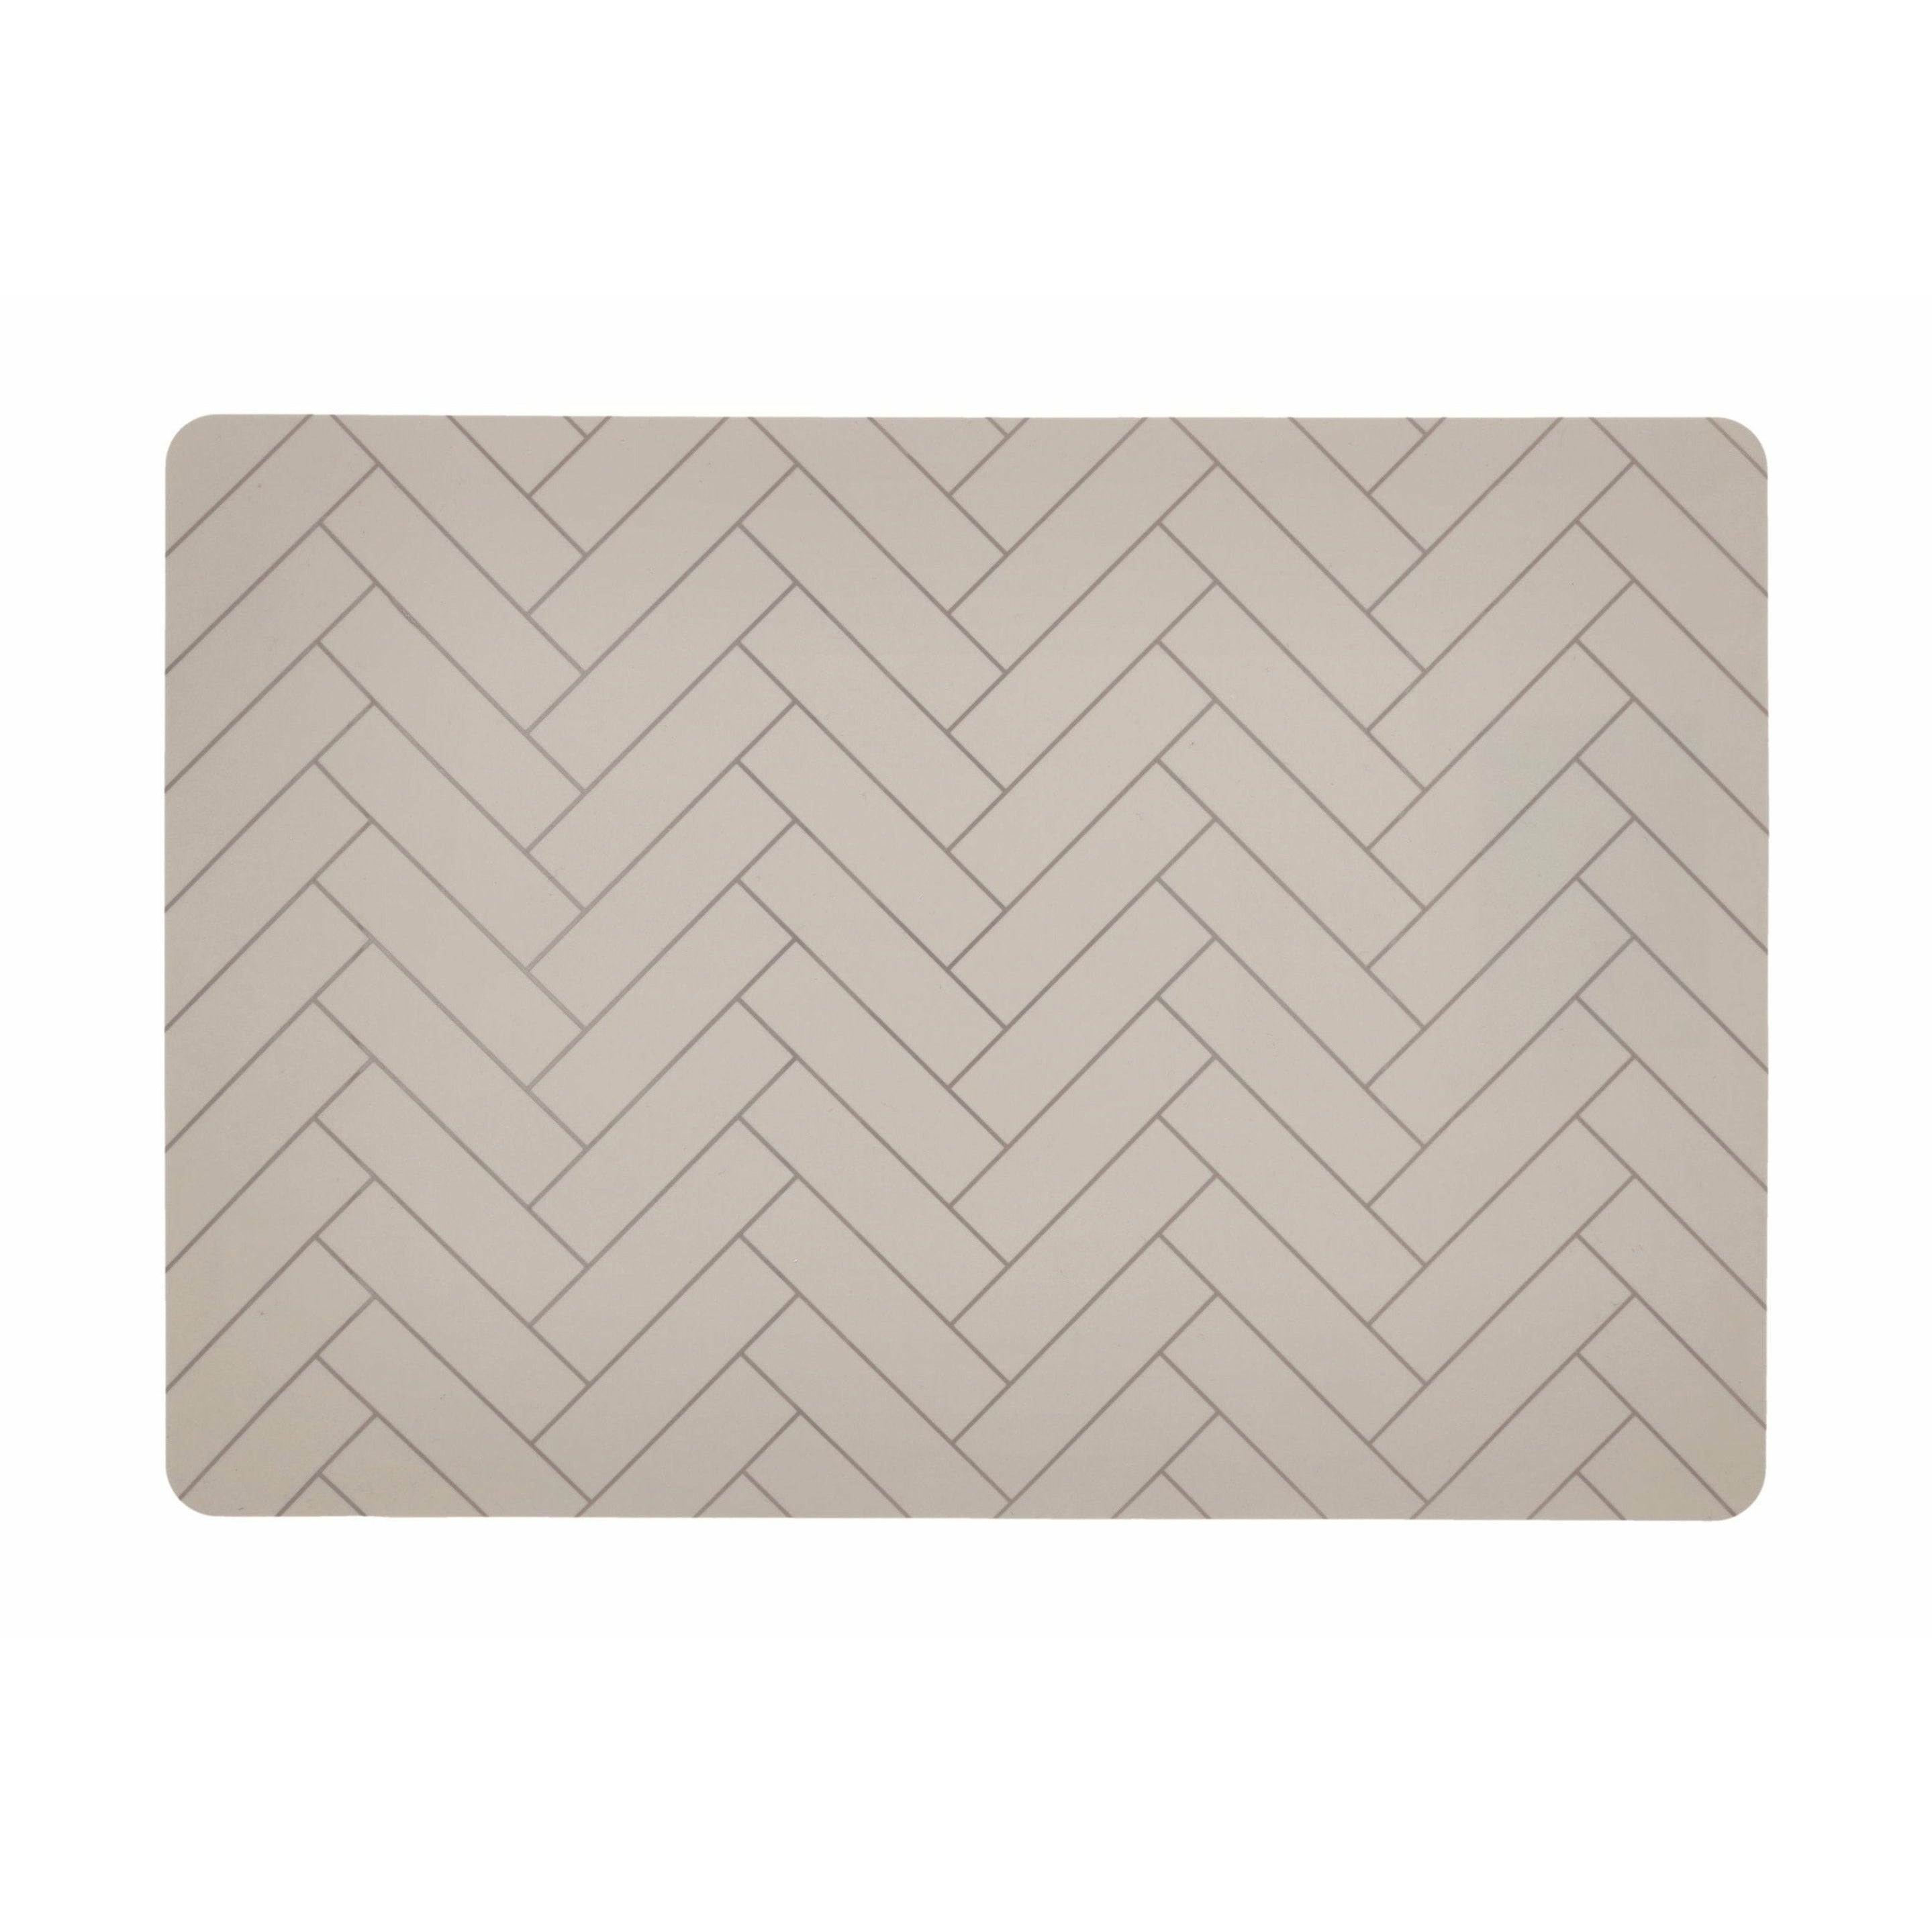 södahl瓷砖placemat 33x48，米色